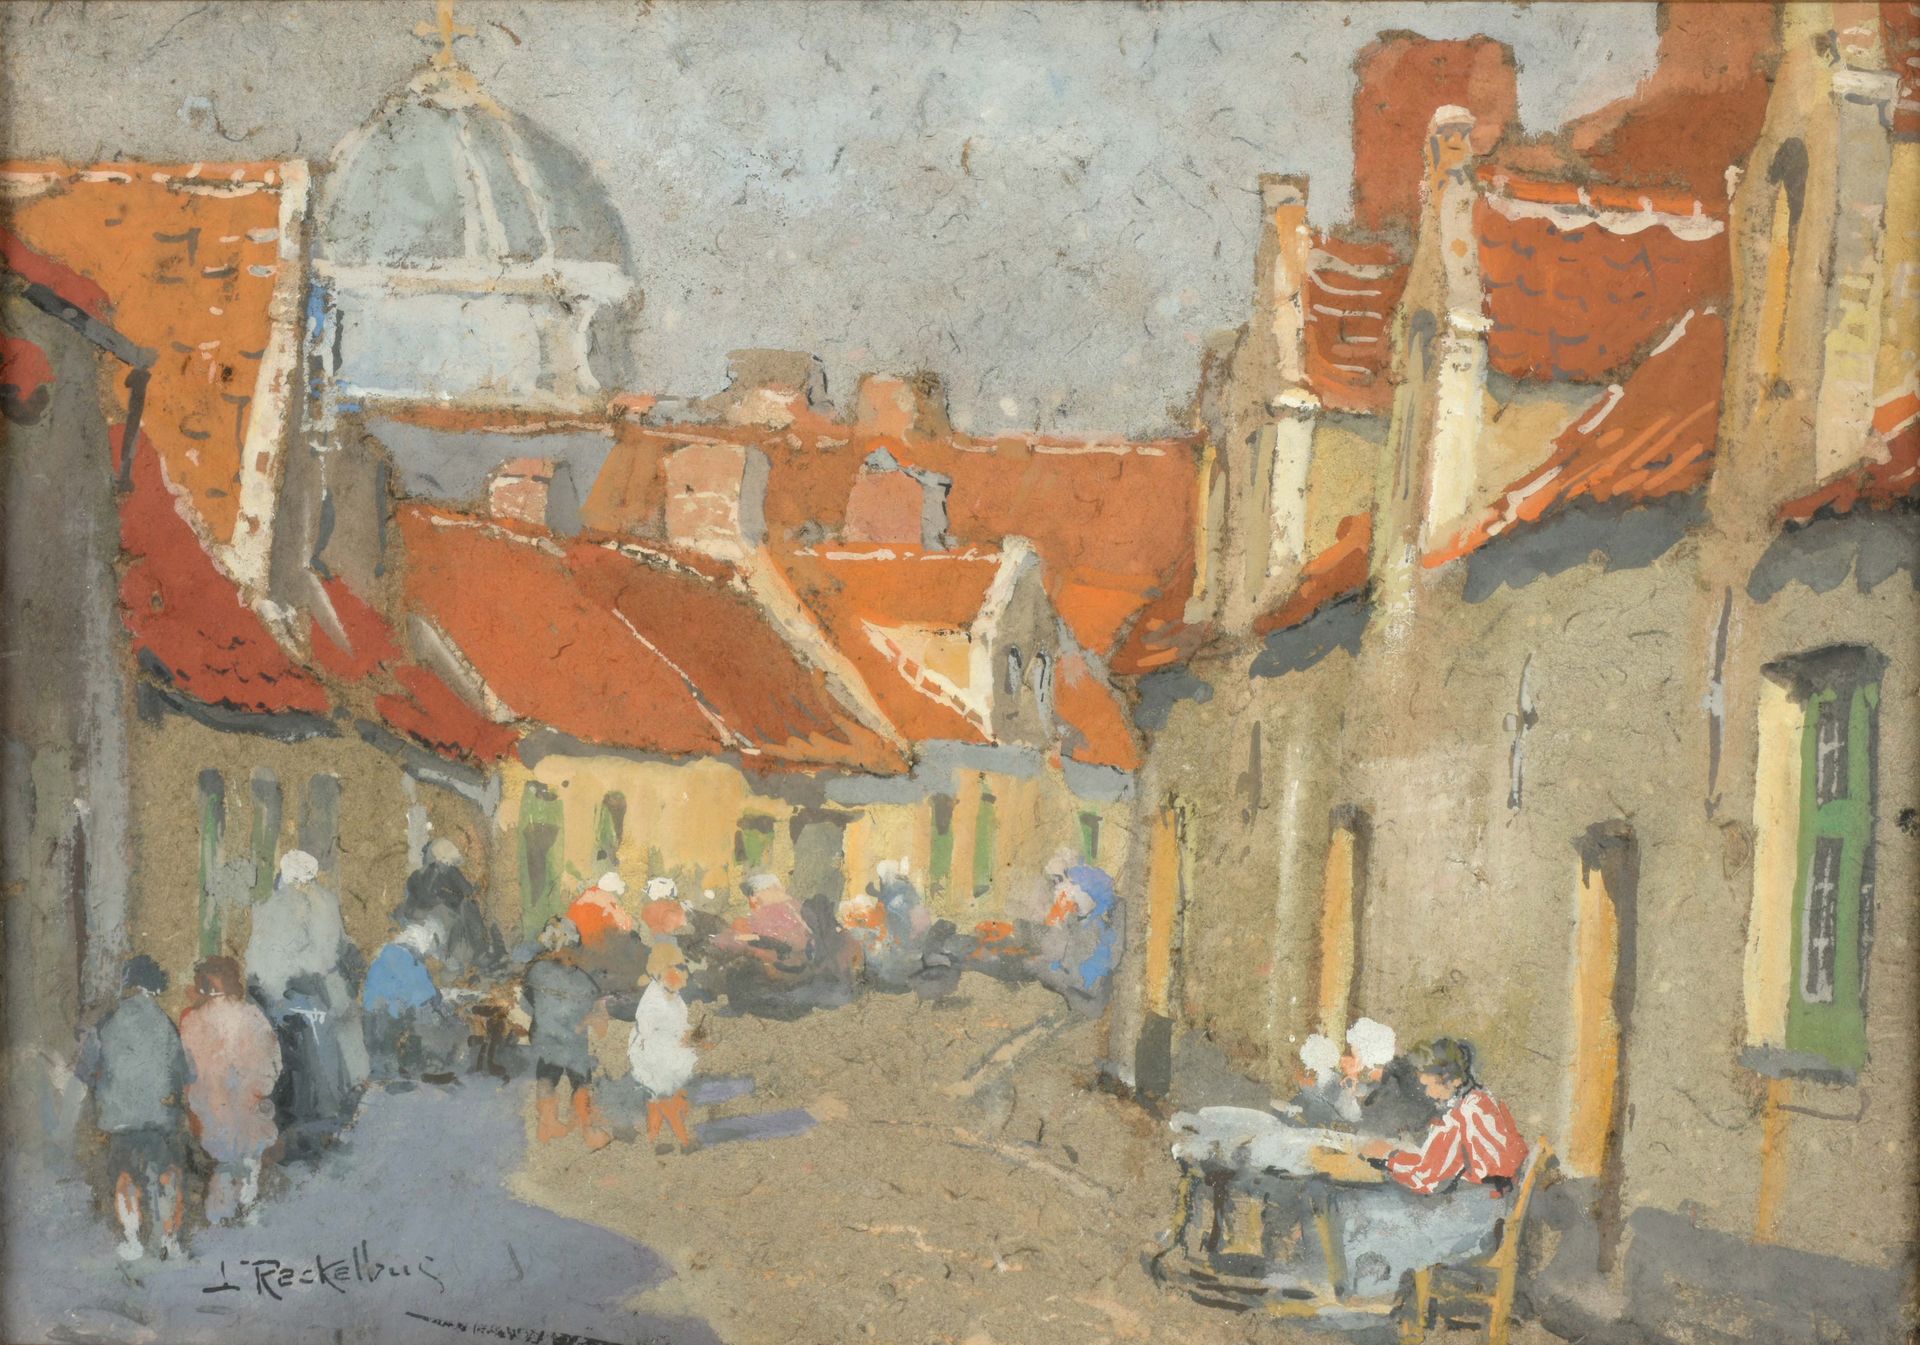 RECKELBUS, Louis (1864-1958) Rolweg a Bruges

Gouache (26 x 37 cm), getekend lin&hellip;